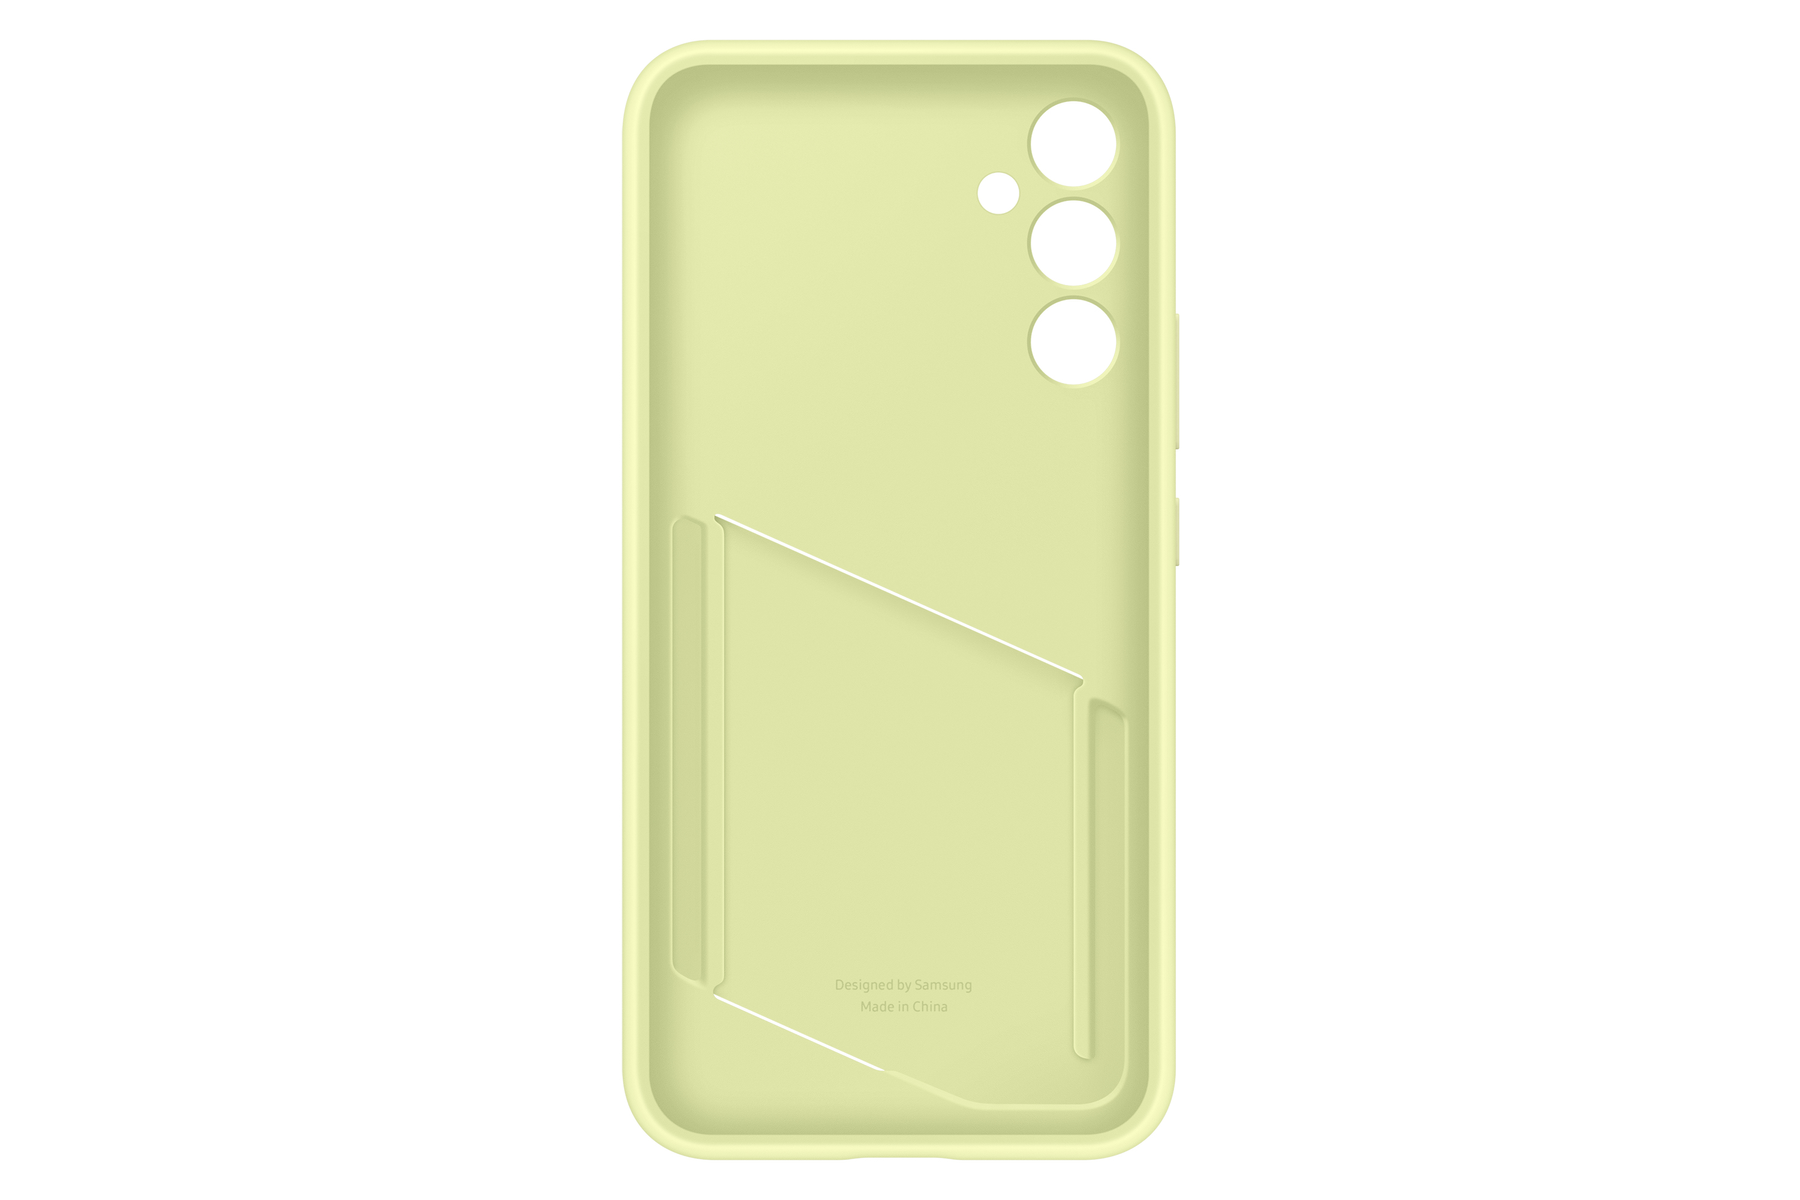 SAMSUNG Galaxy A34 Fall - Kalk, Backcover, Samsung, A34, Grün Card Slot Fall - Galaxy